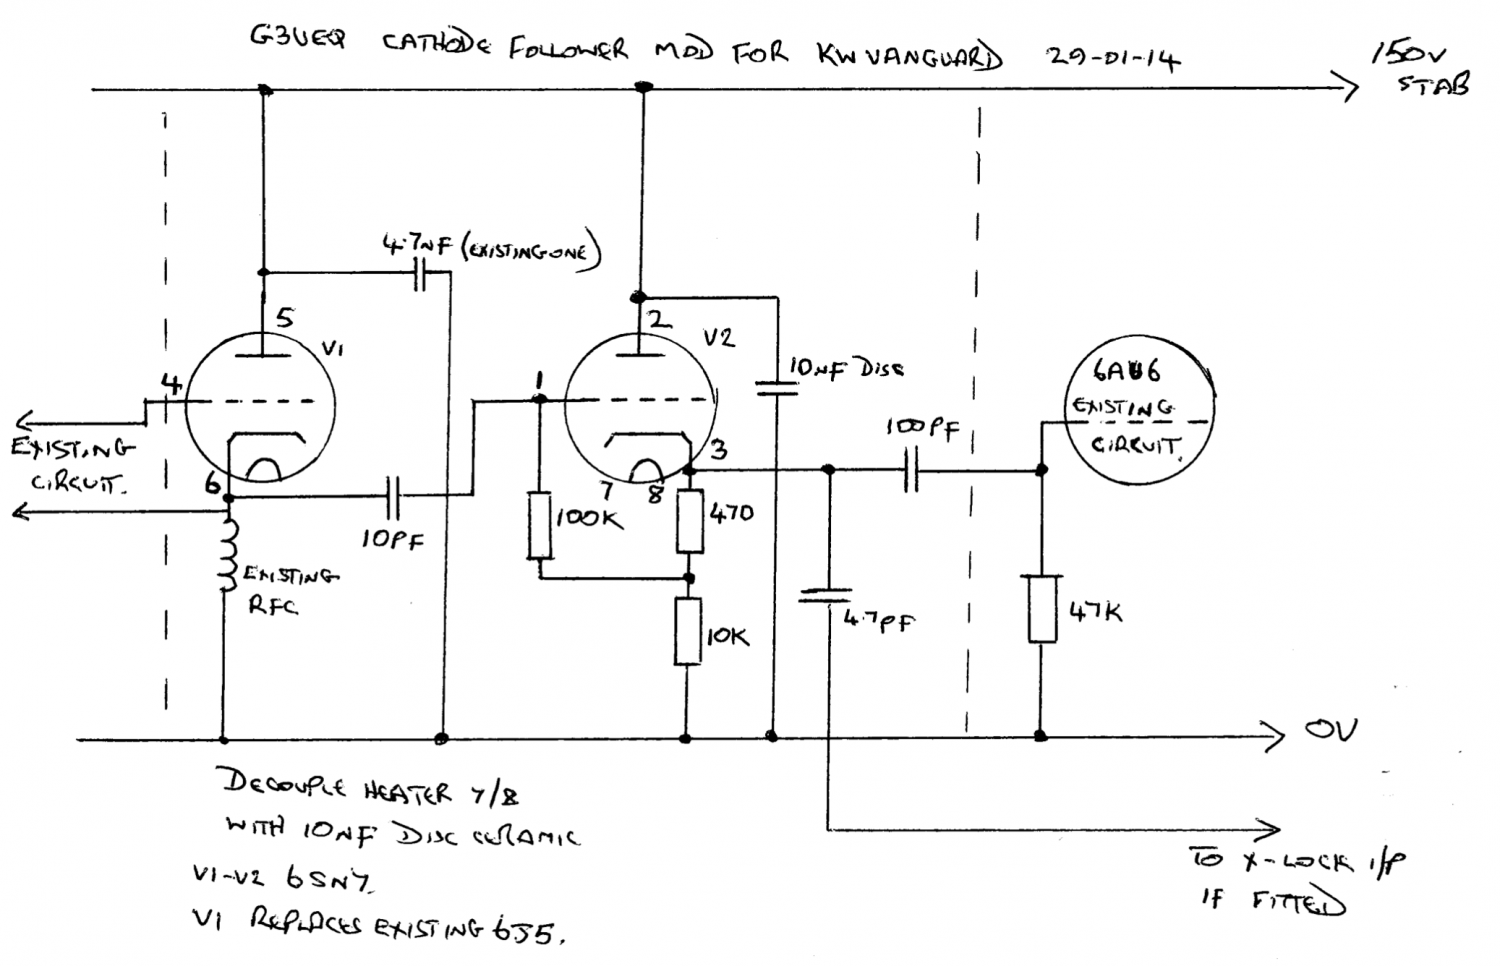 KW Vanguard - Cathode follower modification (Source G3VEQ)